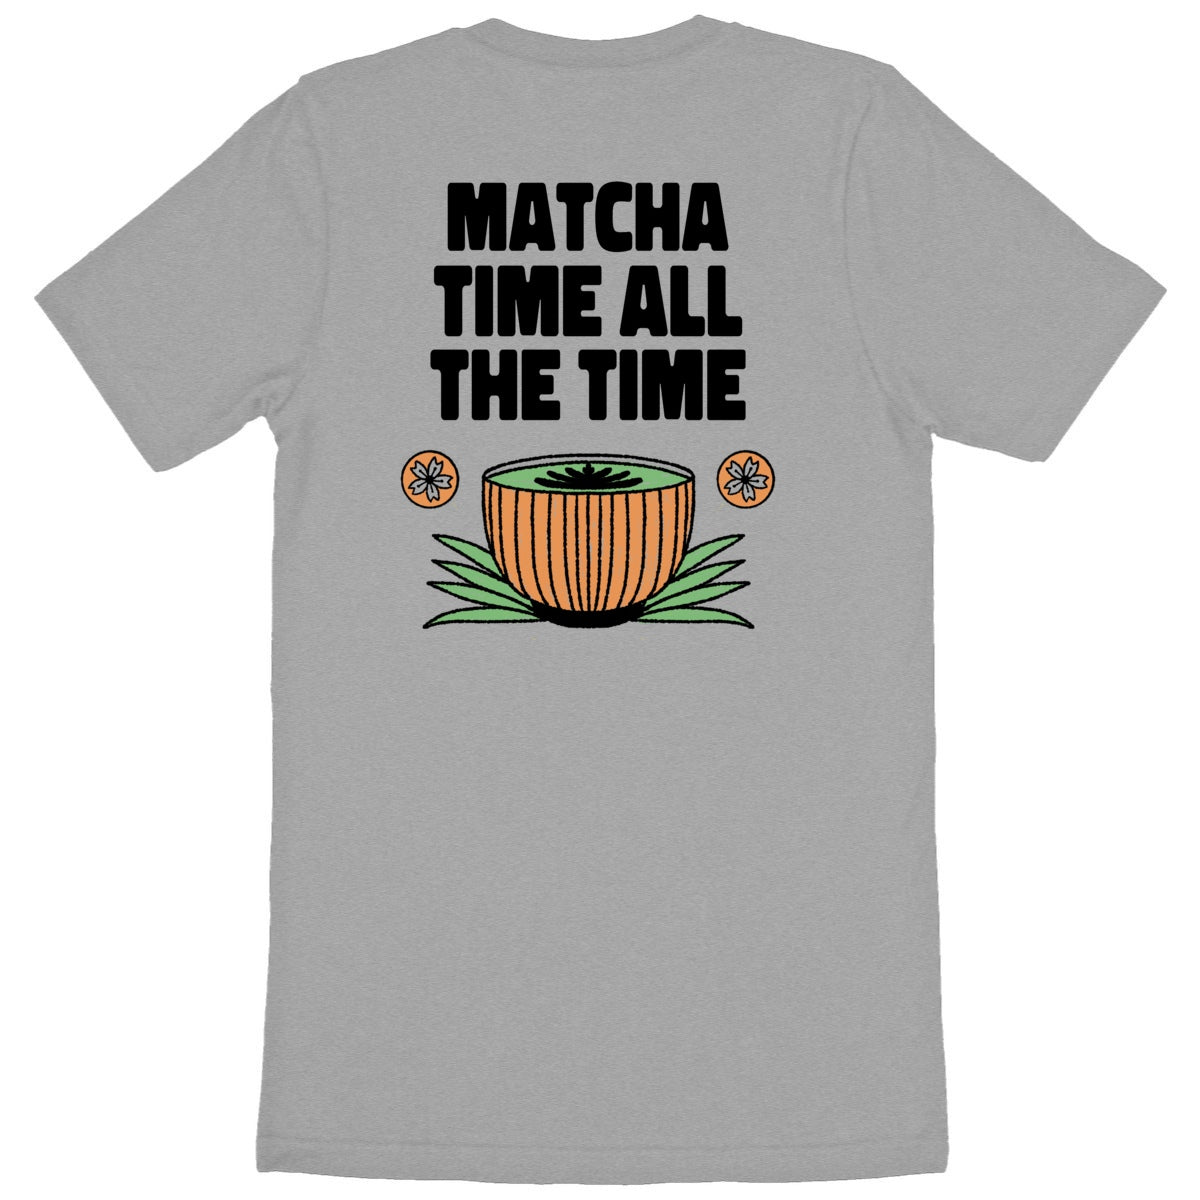 Matcha time all the time - Organic T-shirt